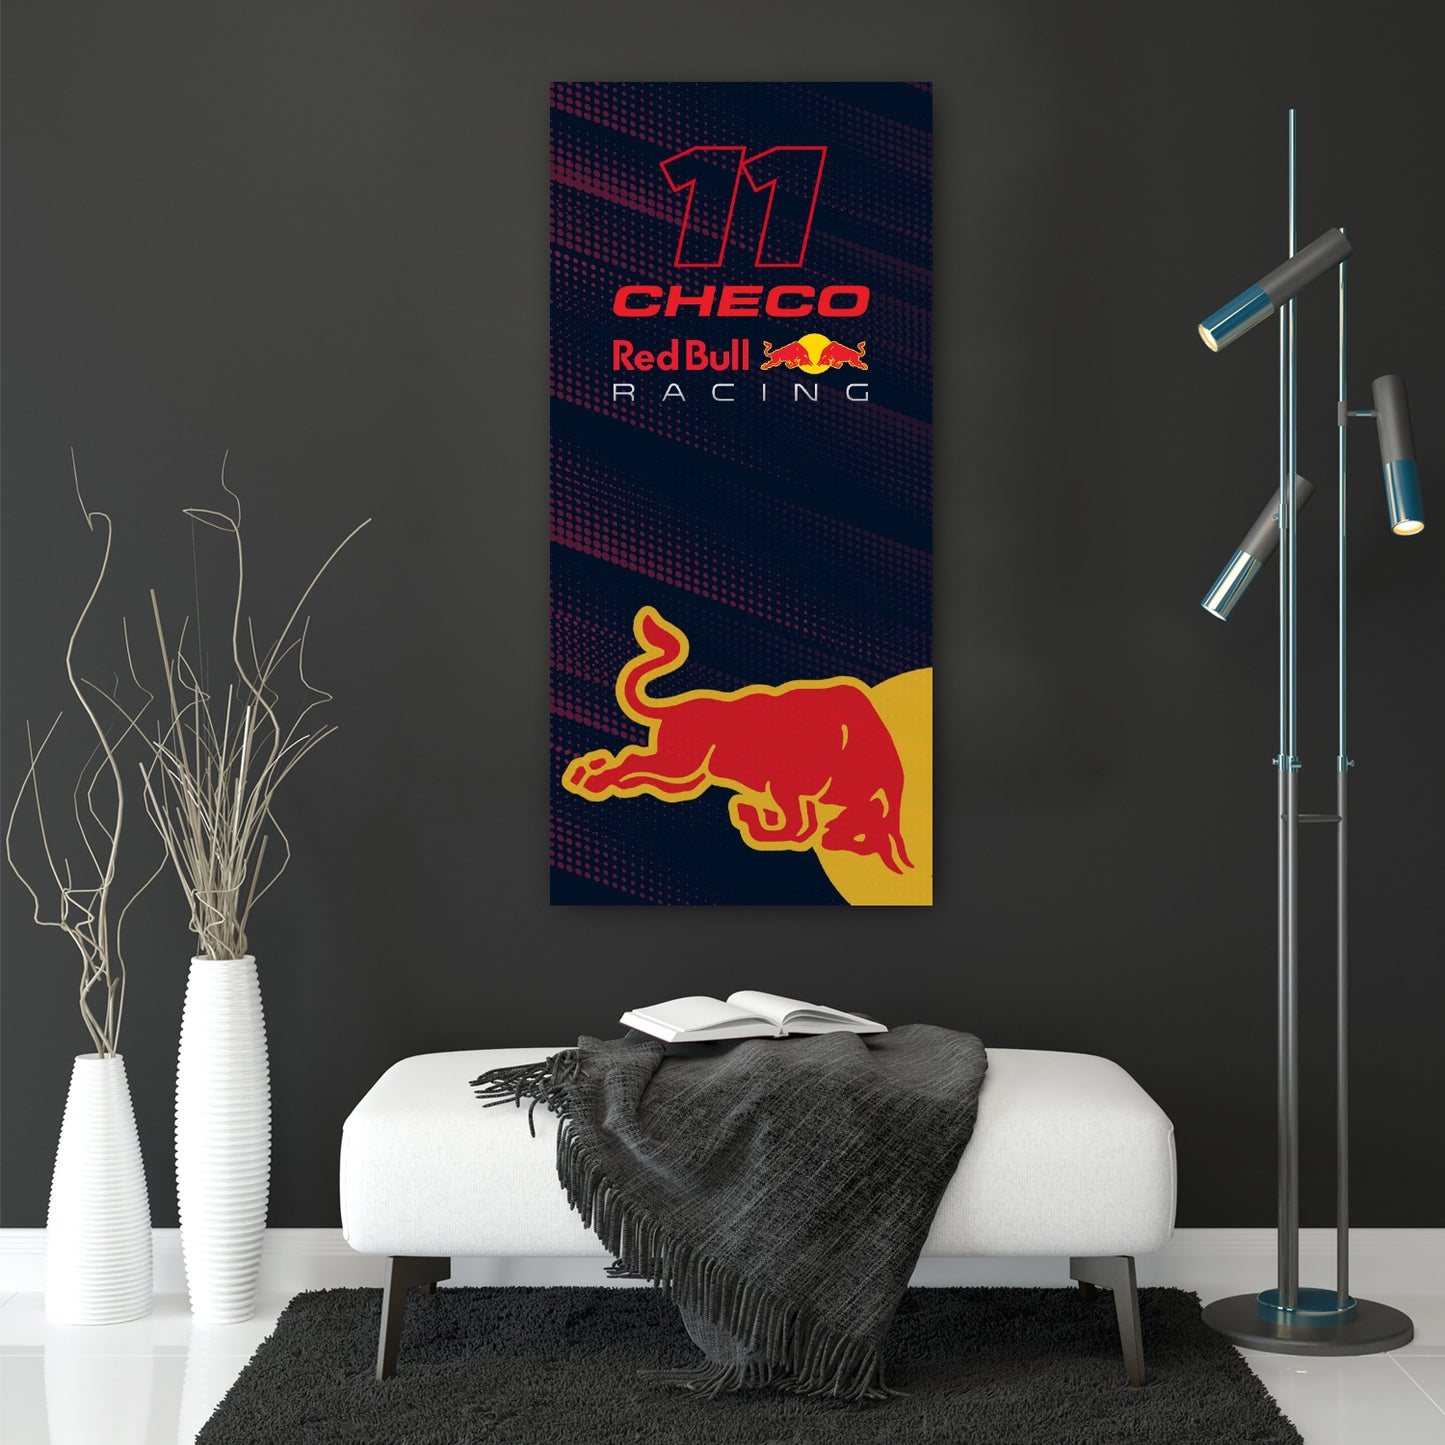 Checo Perez Red Bull - Maxigráfica Shop